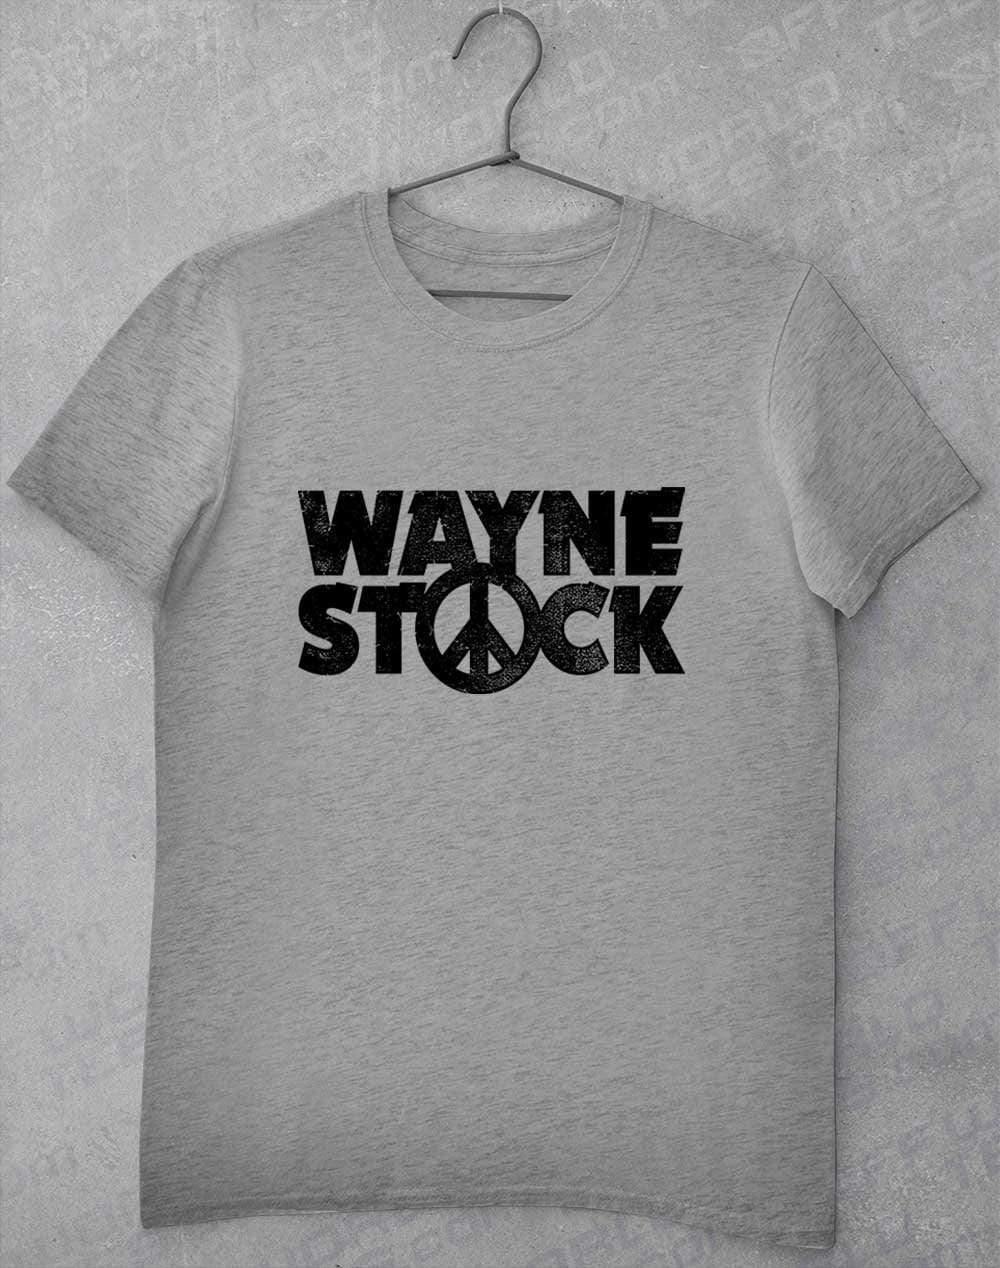 Waynestock T-Shirt S / Heather Grey  - Off World Tees